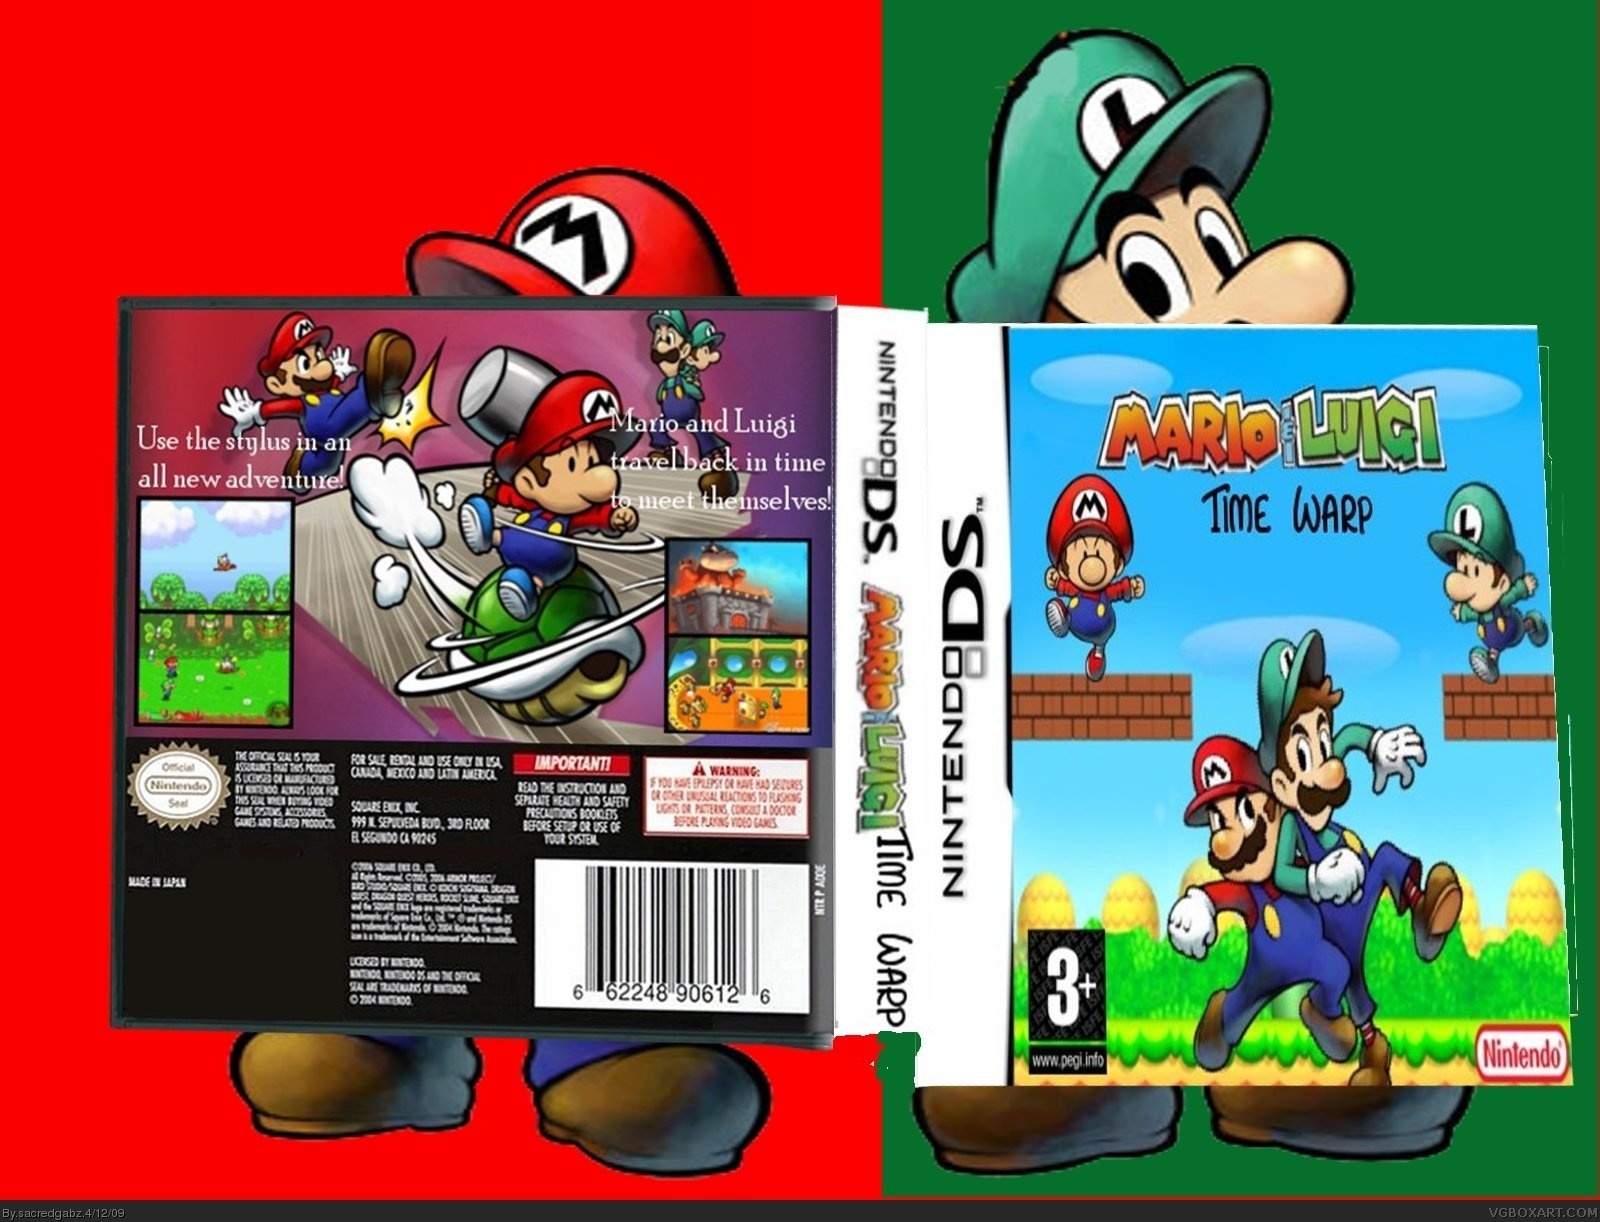 Mario and Luigi: Time Warp box cover